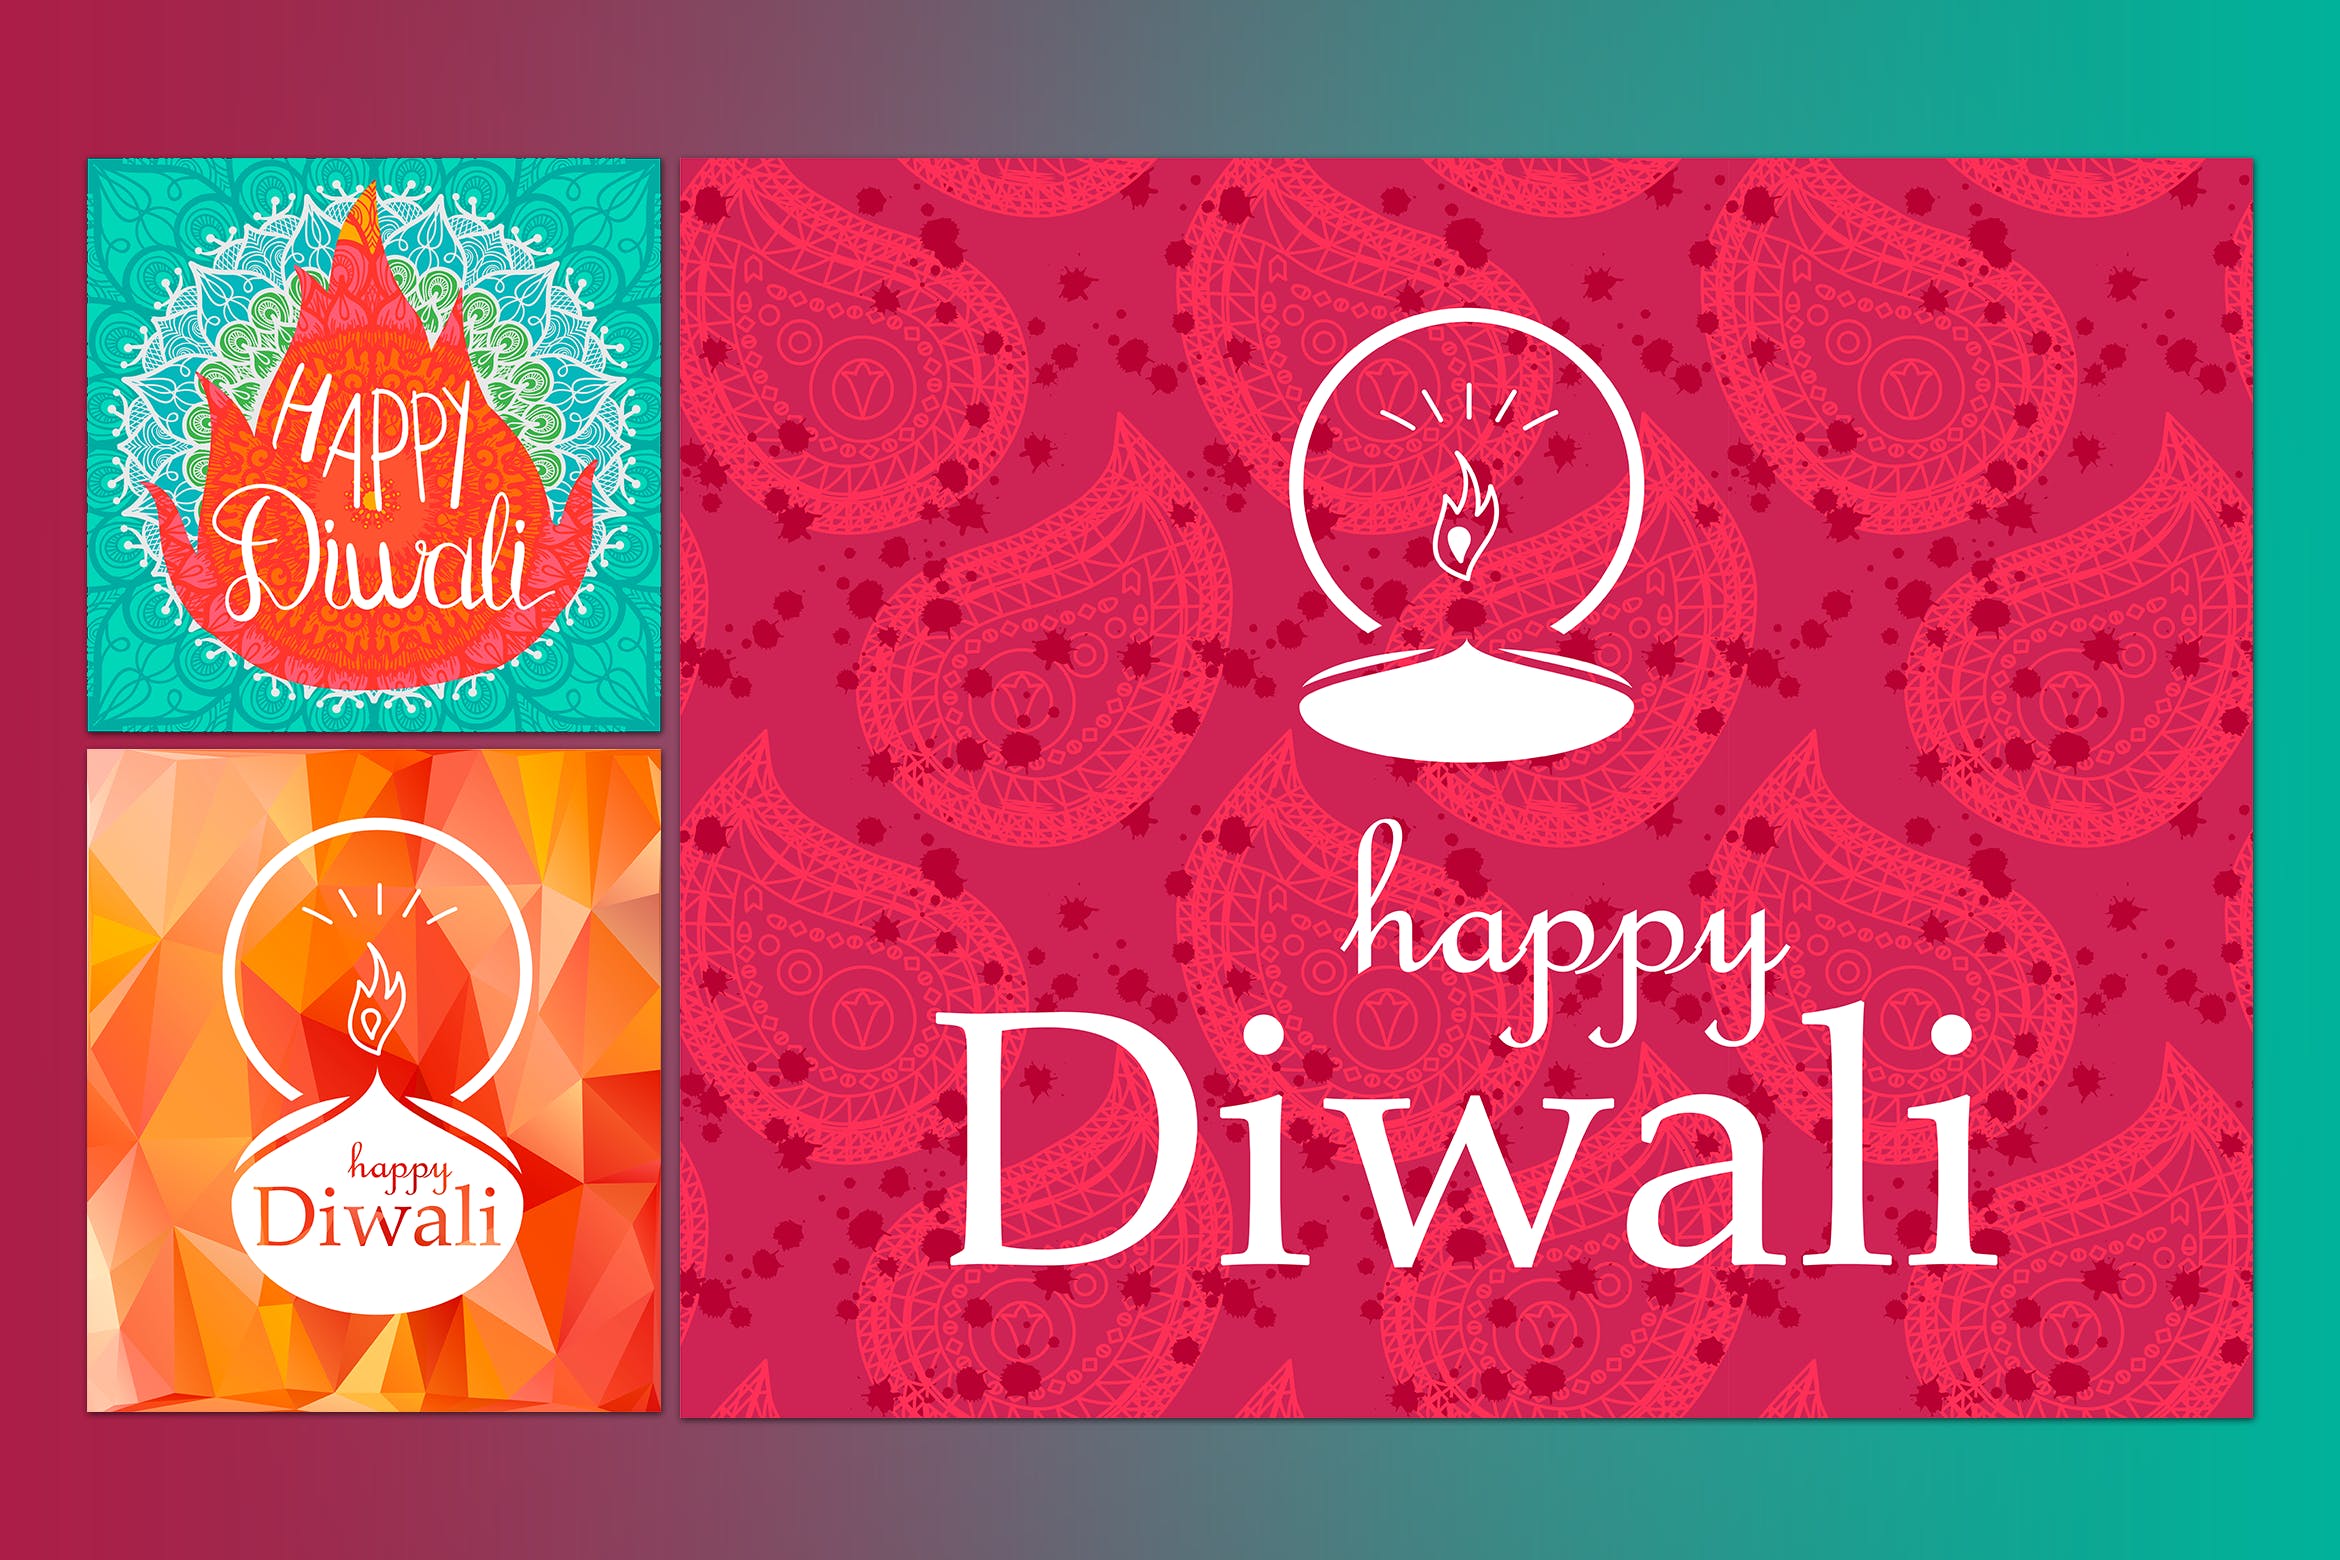 印度排灯节主题矢量Banner图设计模板 Happy Diwali Banners插图